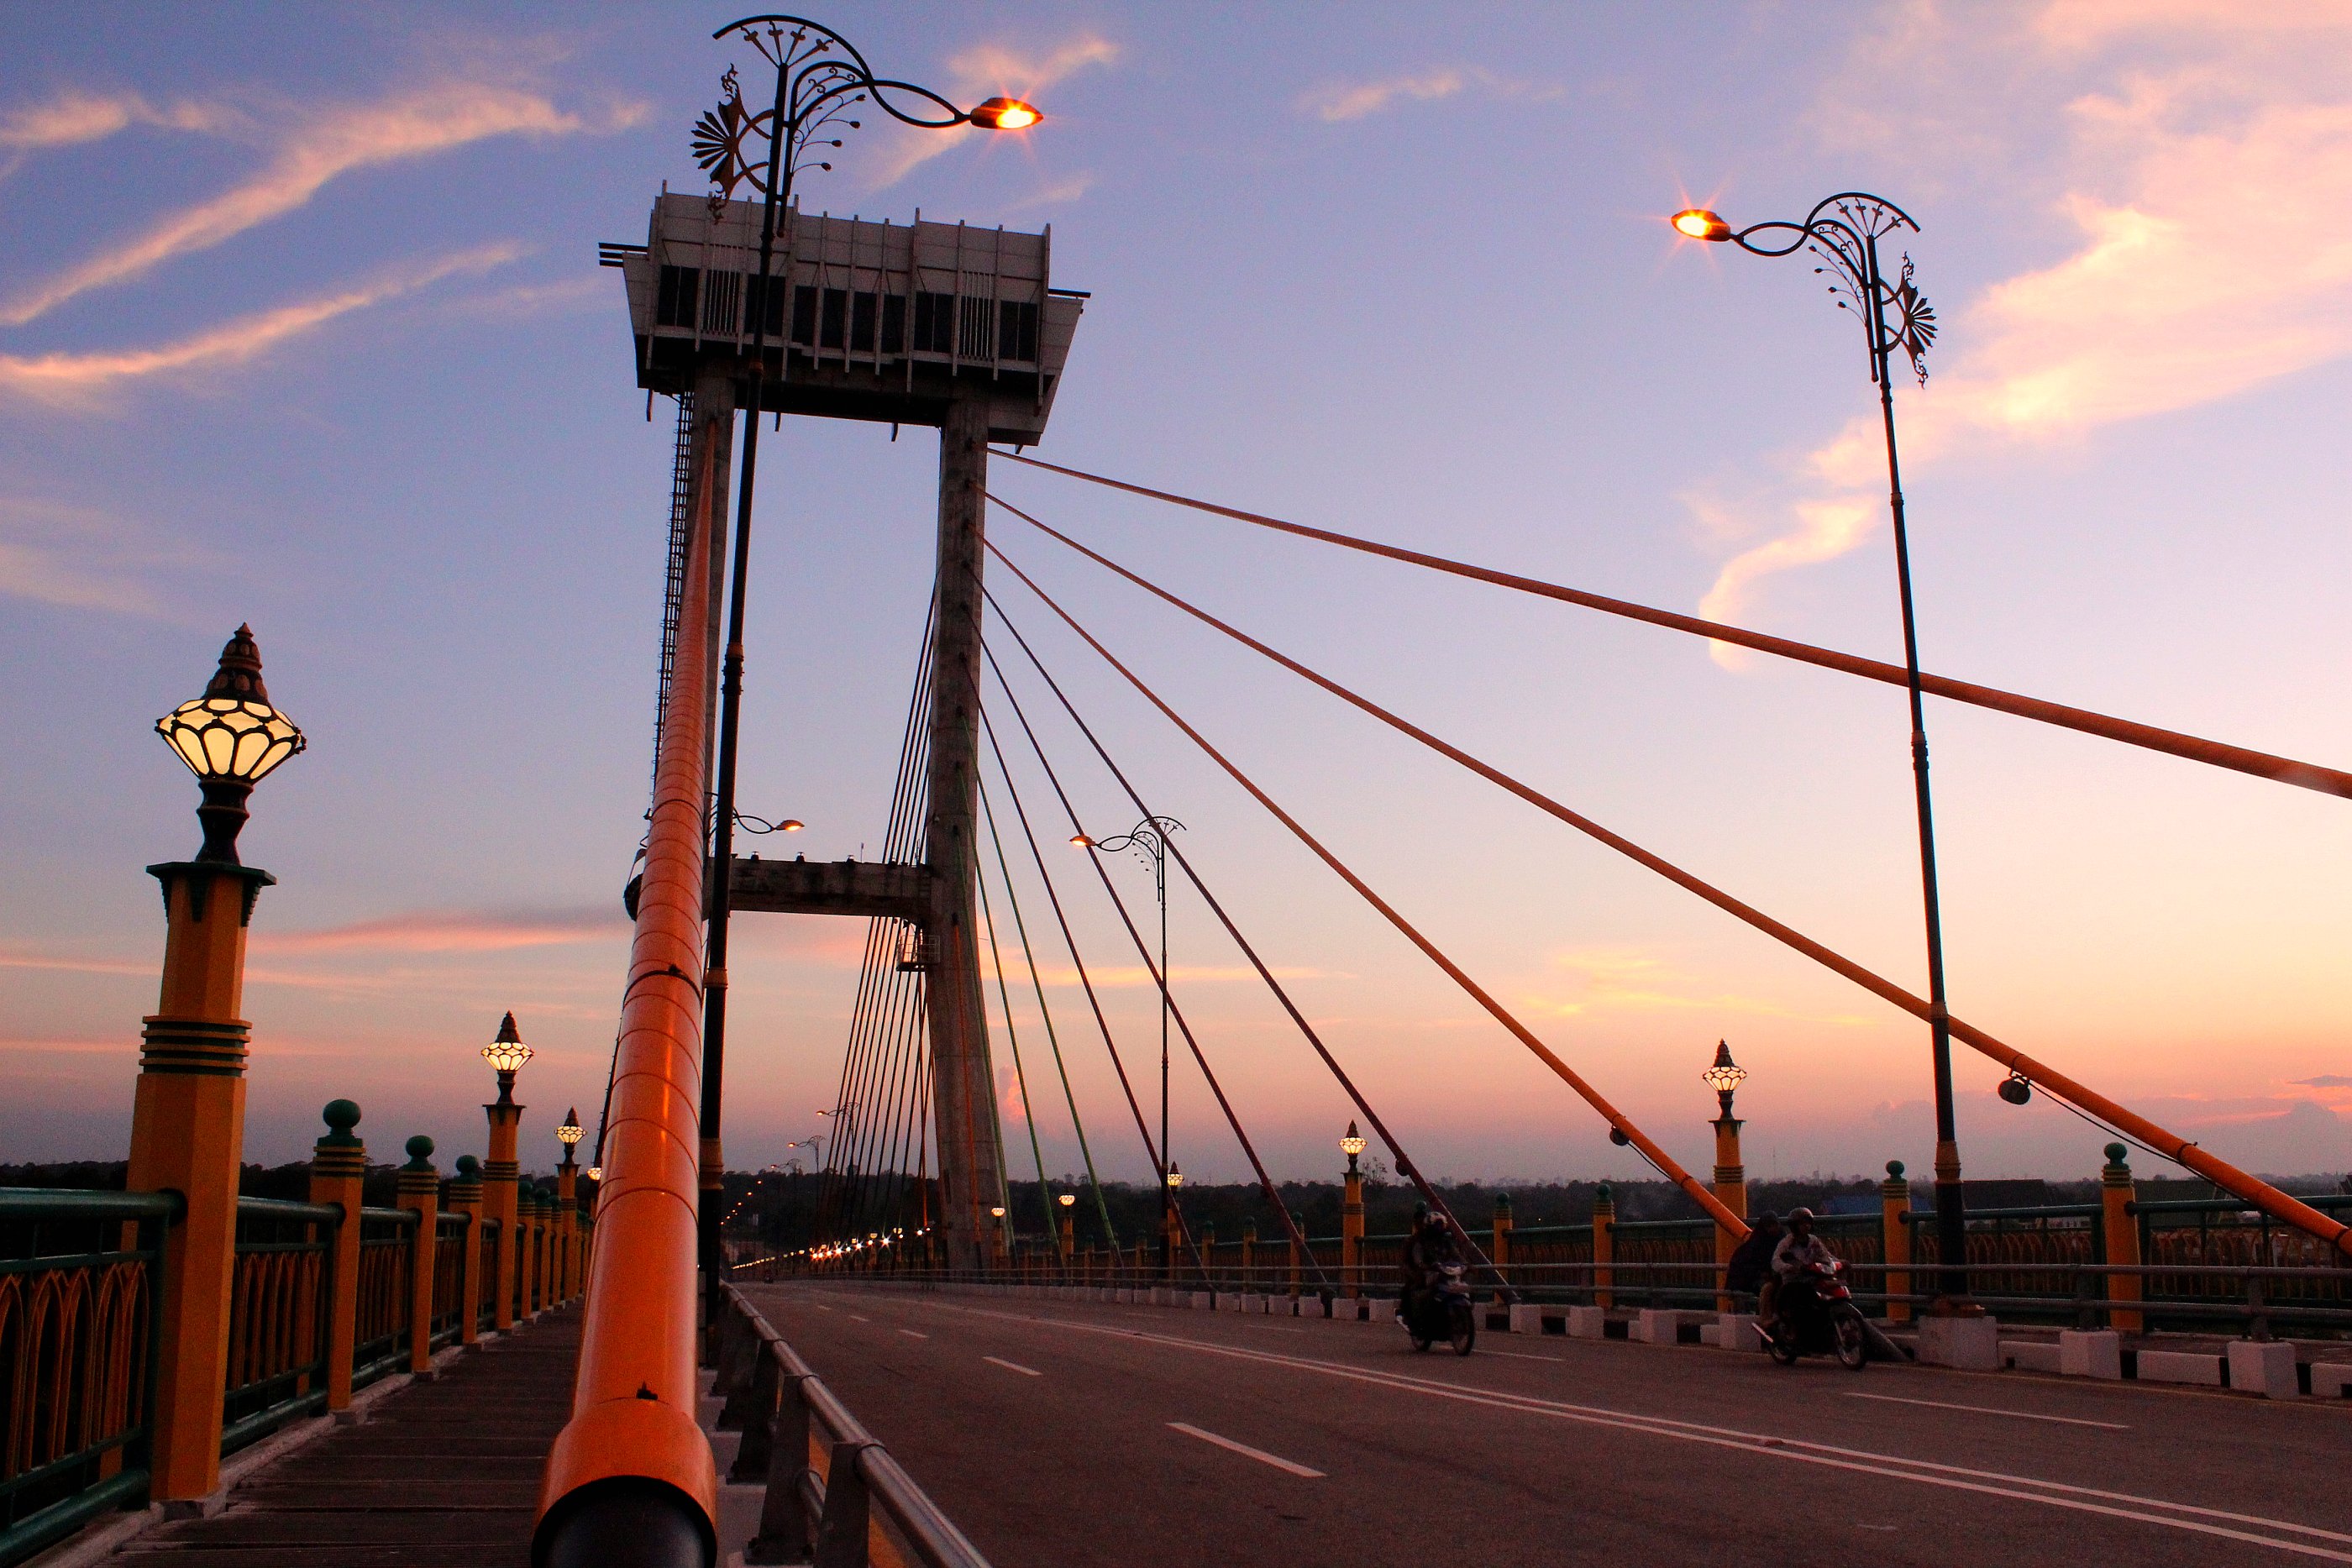 Jembatan Tengku Agung Sultanah Latifah Wikipedia Bahasa